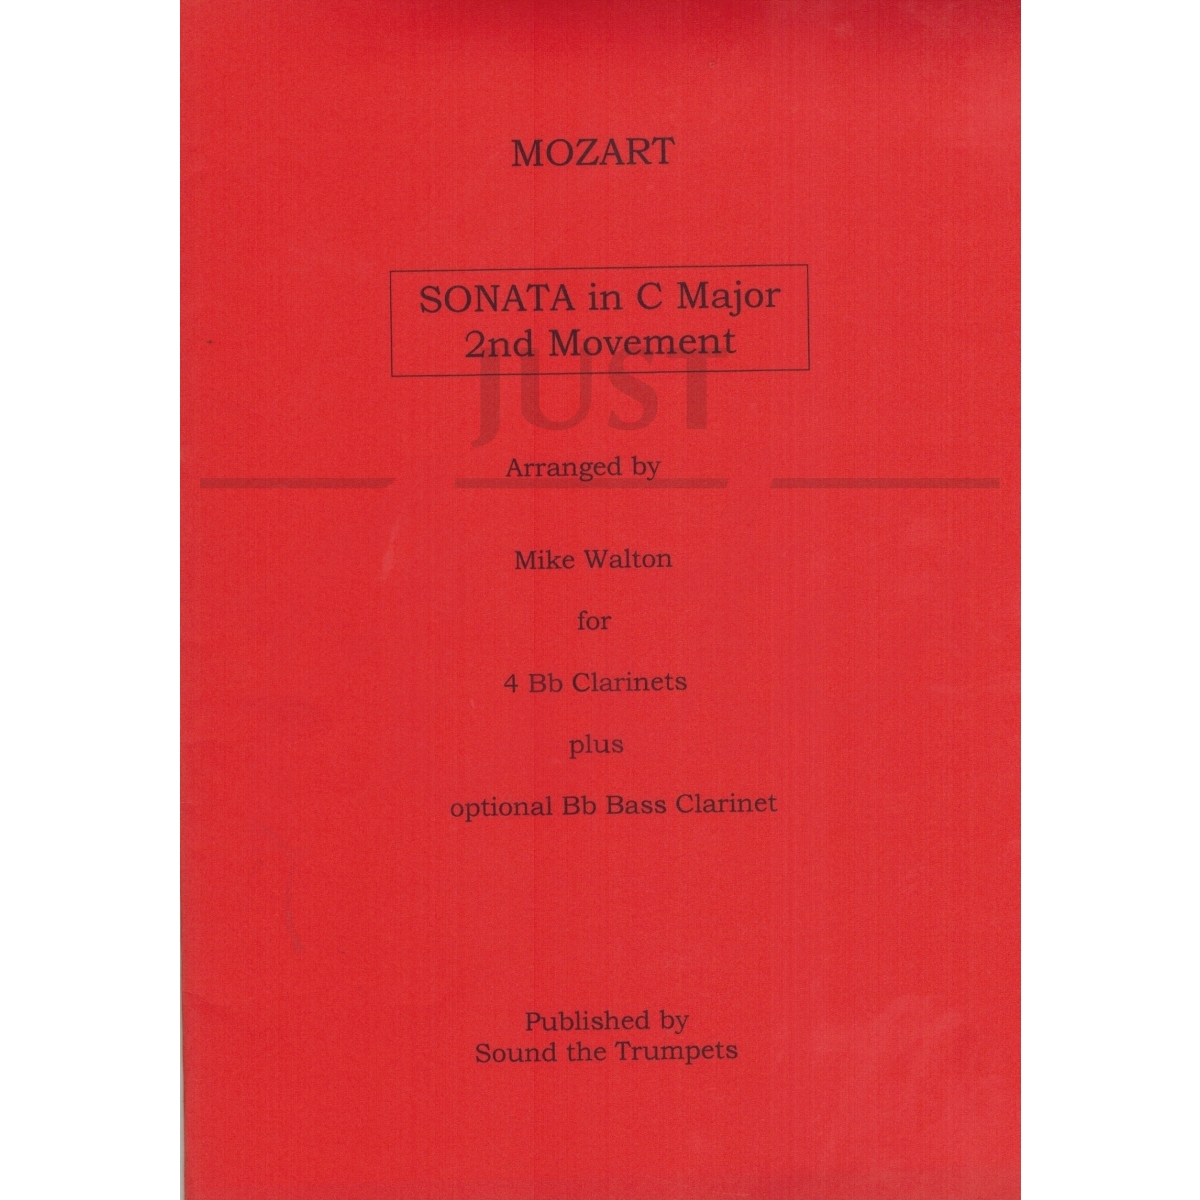 Sonata in C major, 2nd movement for Clarinet Quartet plus optional Bass Clarinet